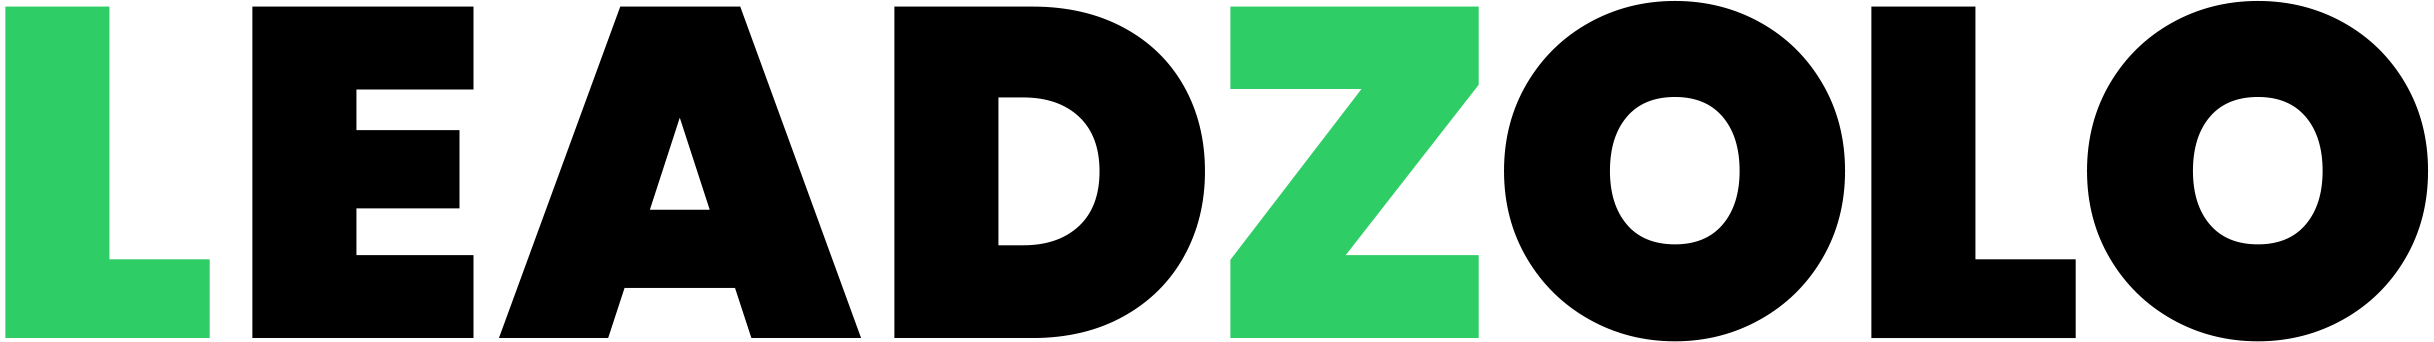 LeadZolo Logo - Transparent (1)